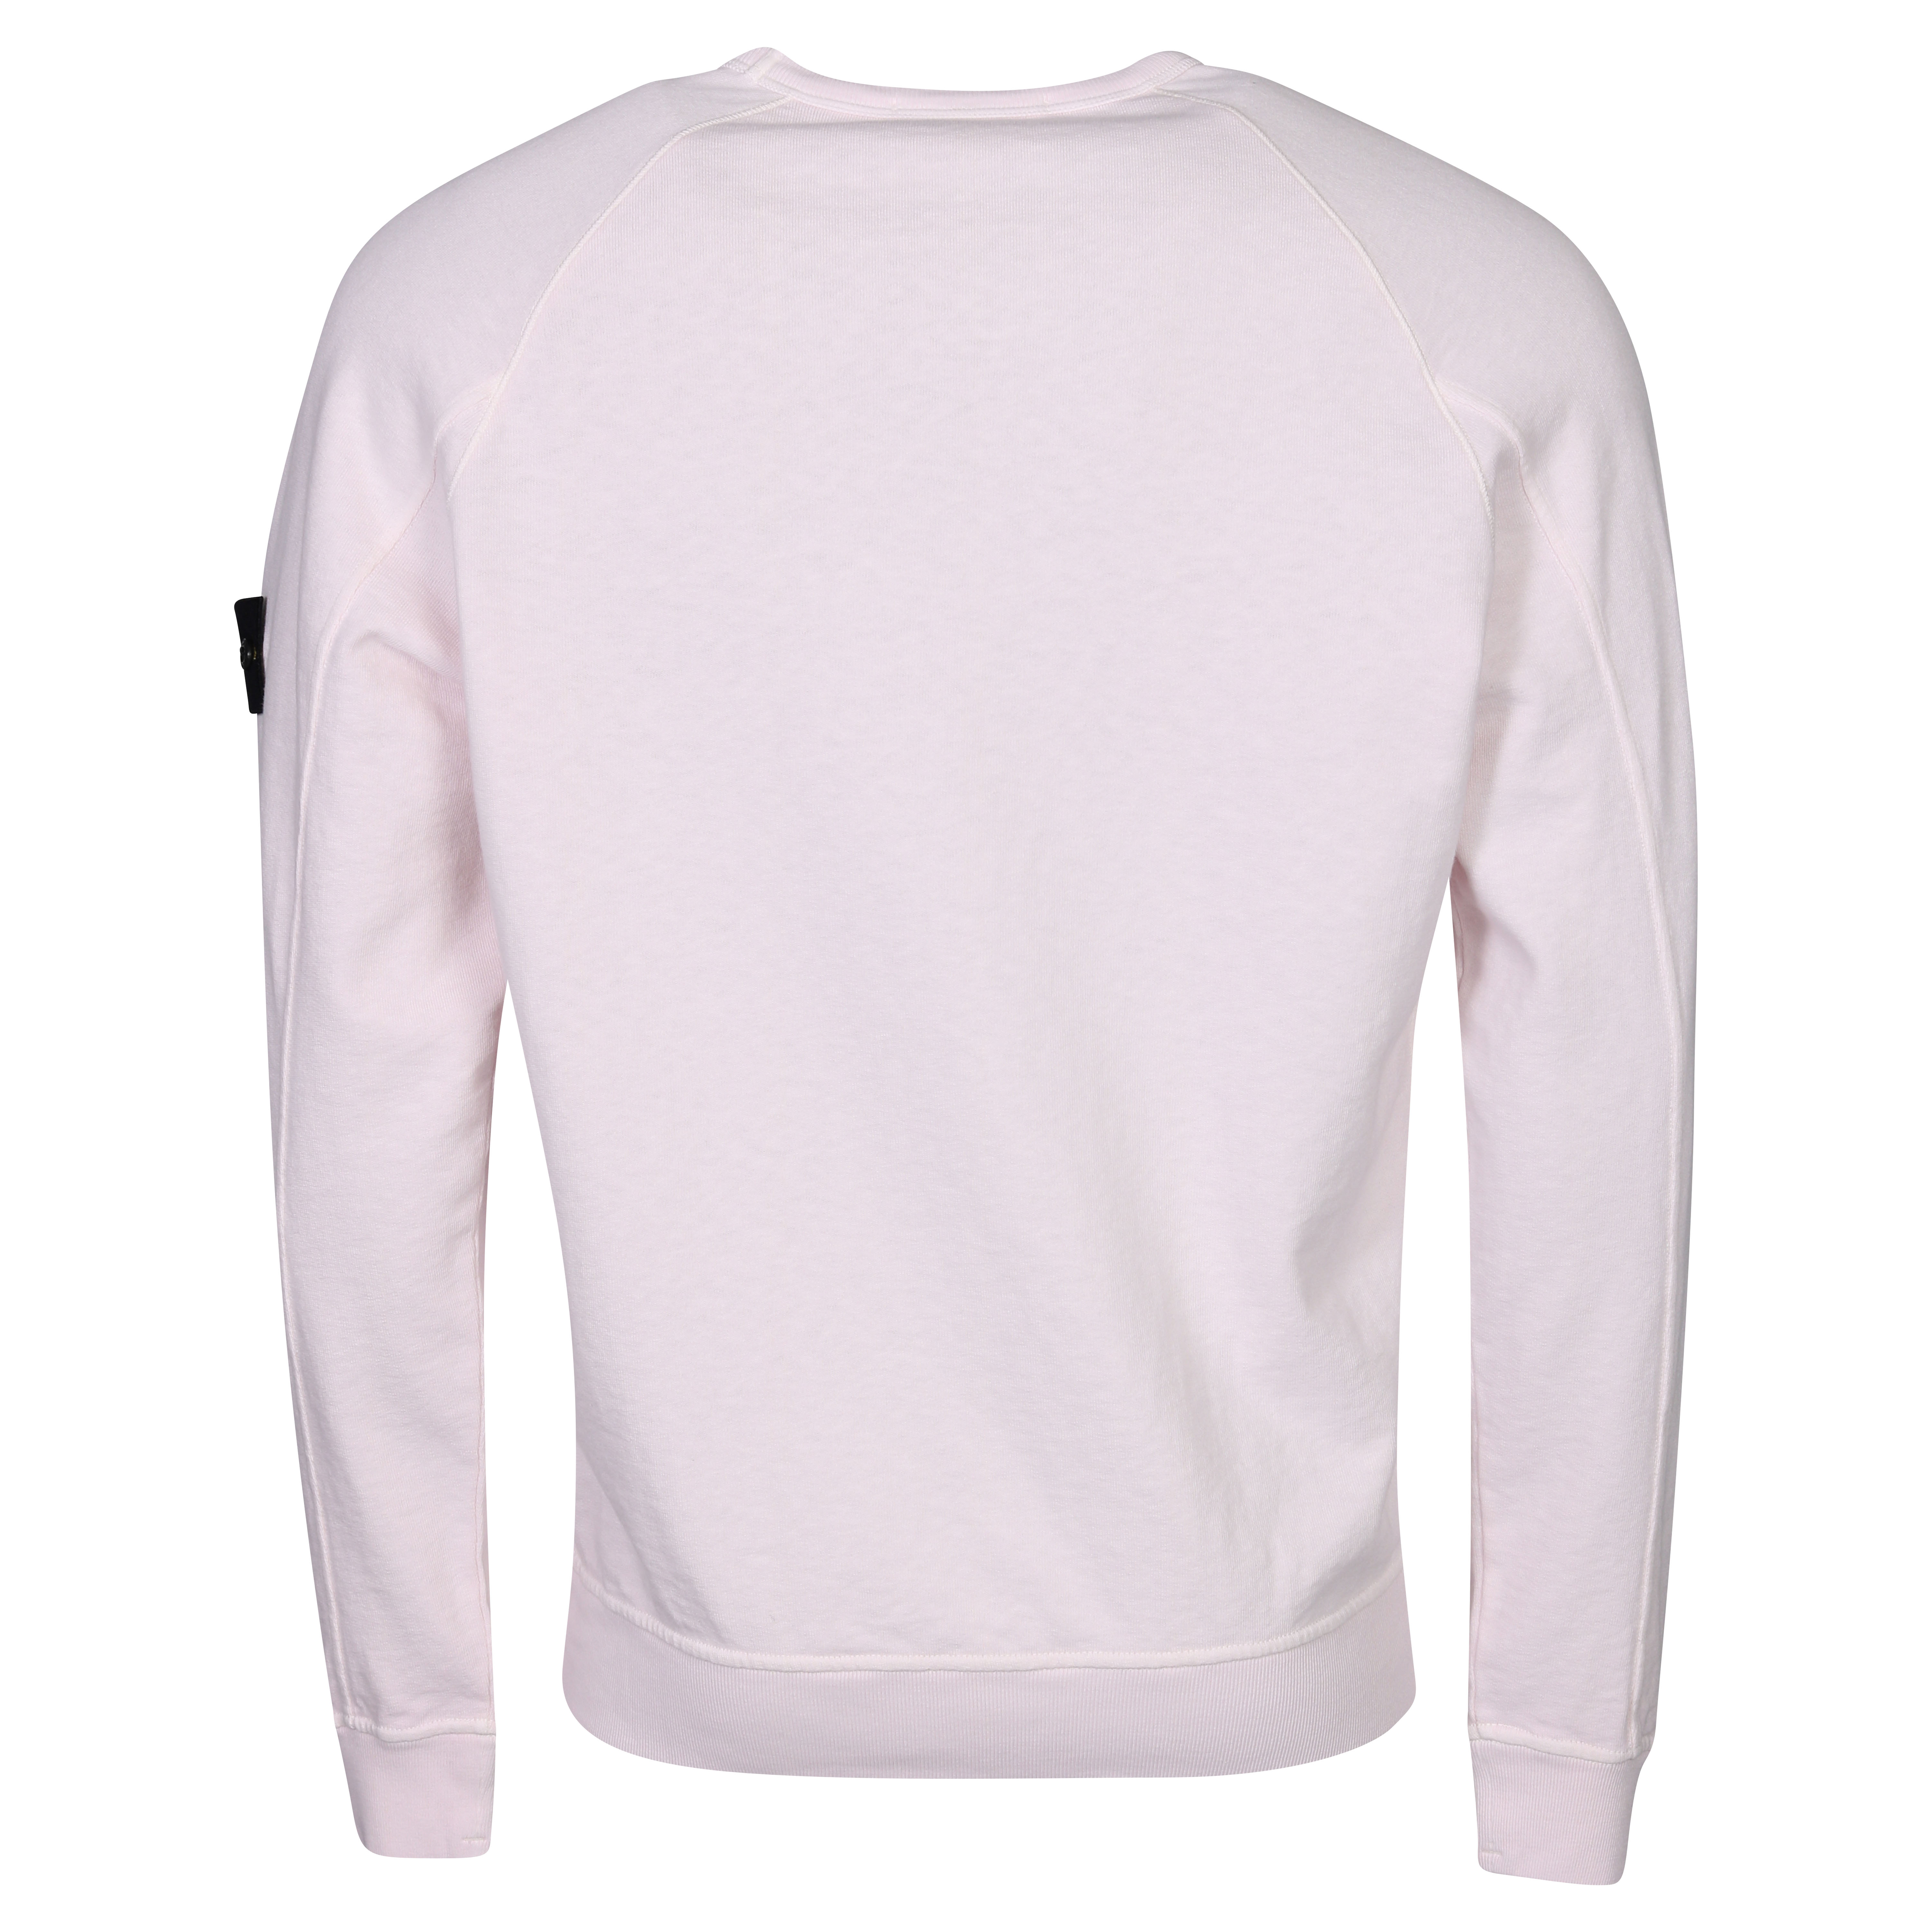 Stone Island Sweatshirt in Washed Light Pink M